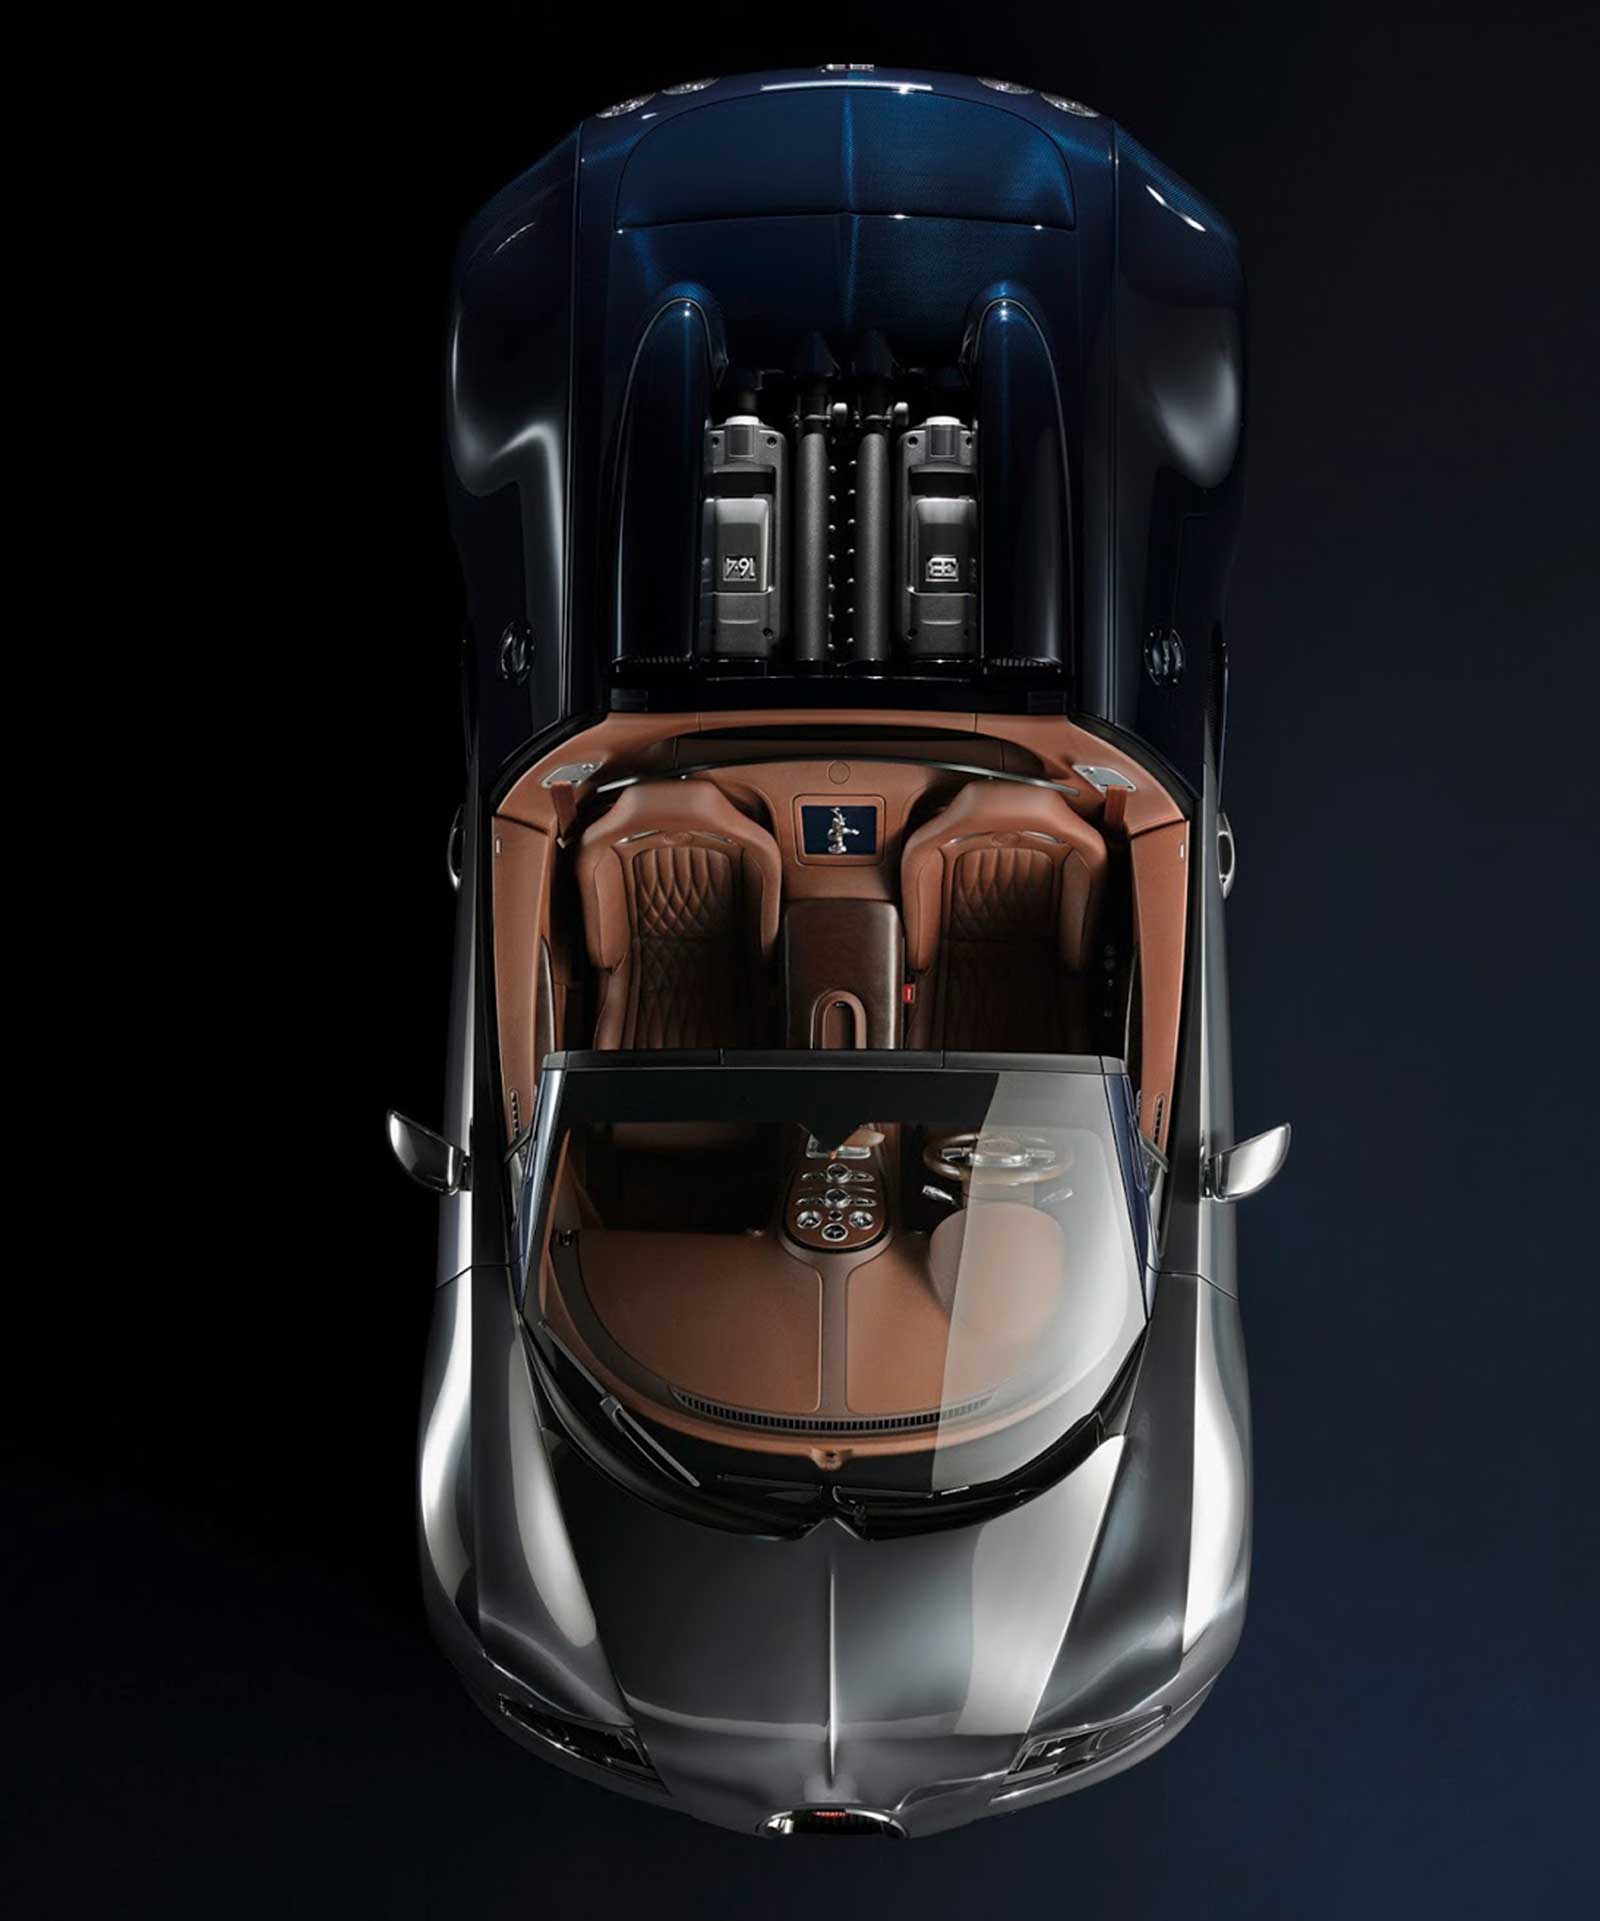 Bugatti, Bugatti-Veyron-Ettore-Bugatti-Edition-Photos-and-Wallpapers: Nama “Ettore Bugatti” Digunakan Sebagai Nama Terakhir Bugatti Veyron